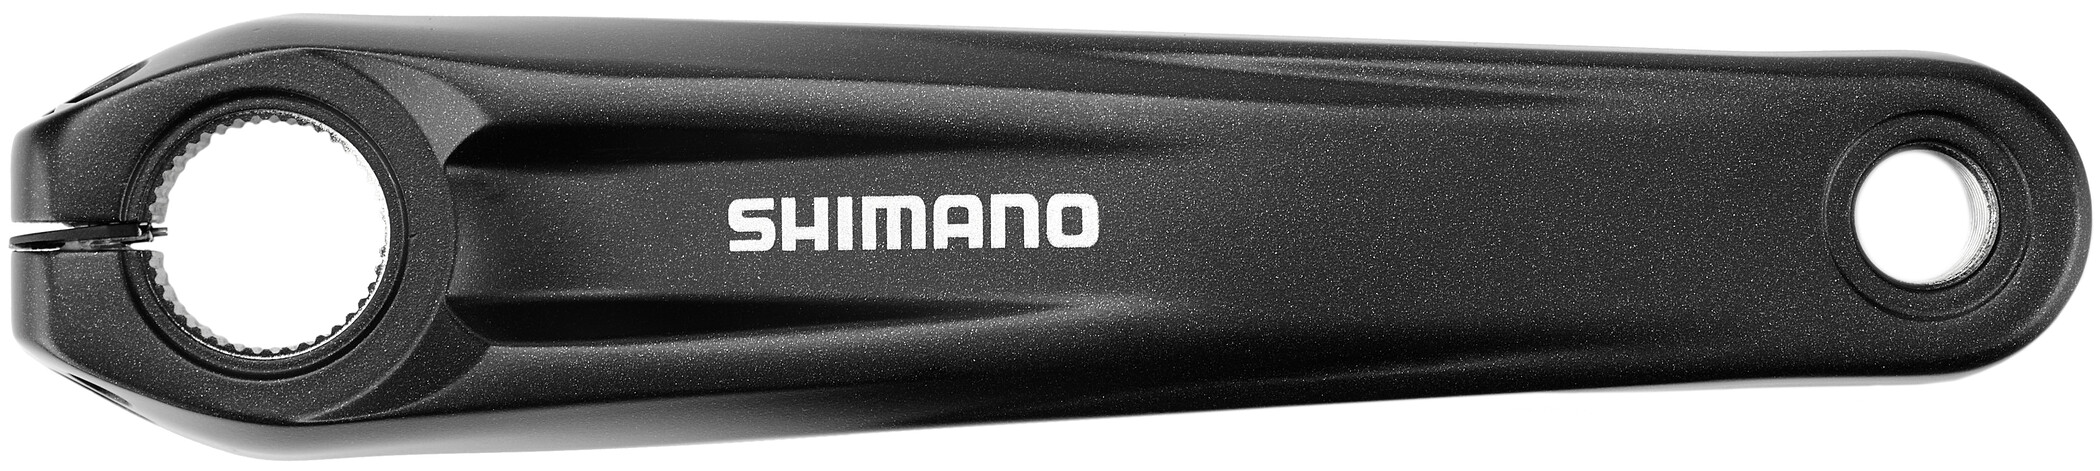 Shimano Steps pedalarm FC-E8000 175 mm | pedalarm